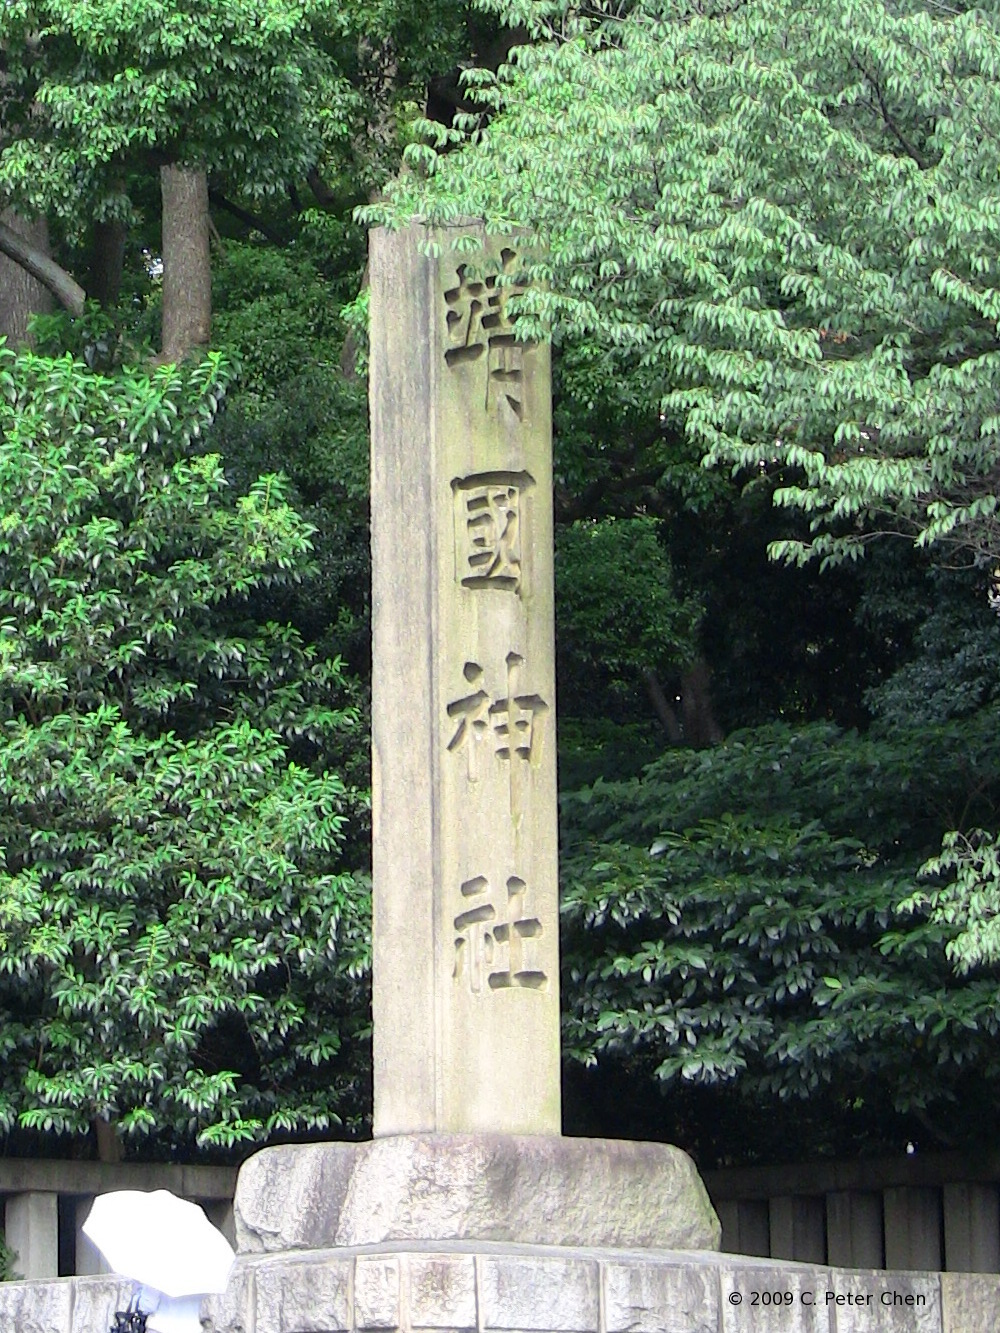 Stone marker with words 'Yasukuni Jinja' at the entrance of the Yasukuni Shrine, Tokyo, Japan, 7 Sep 2009